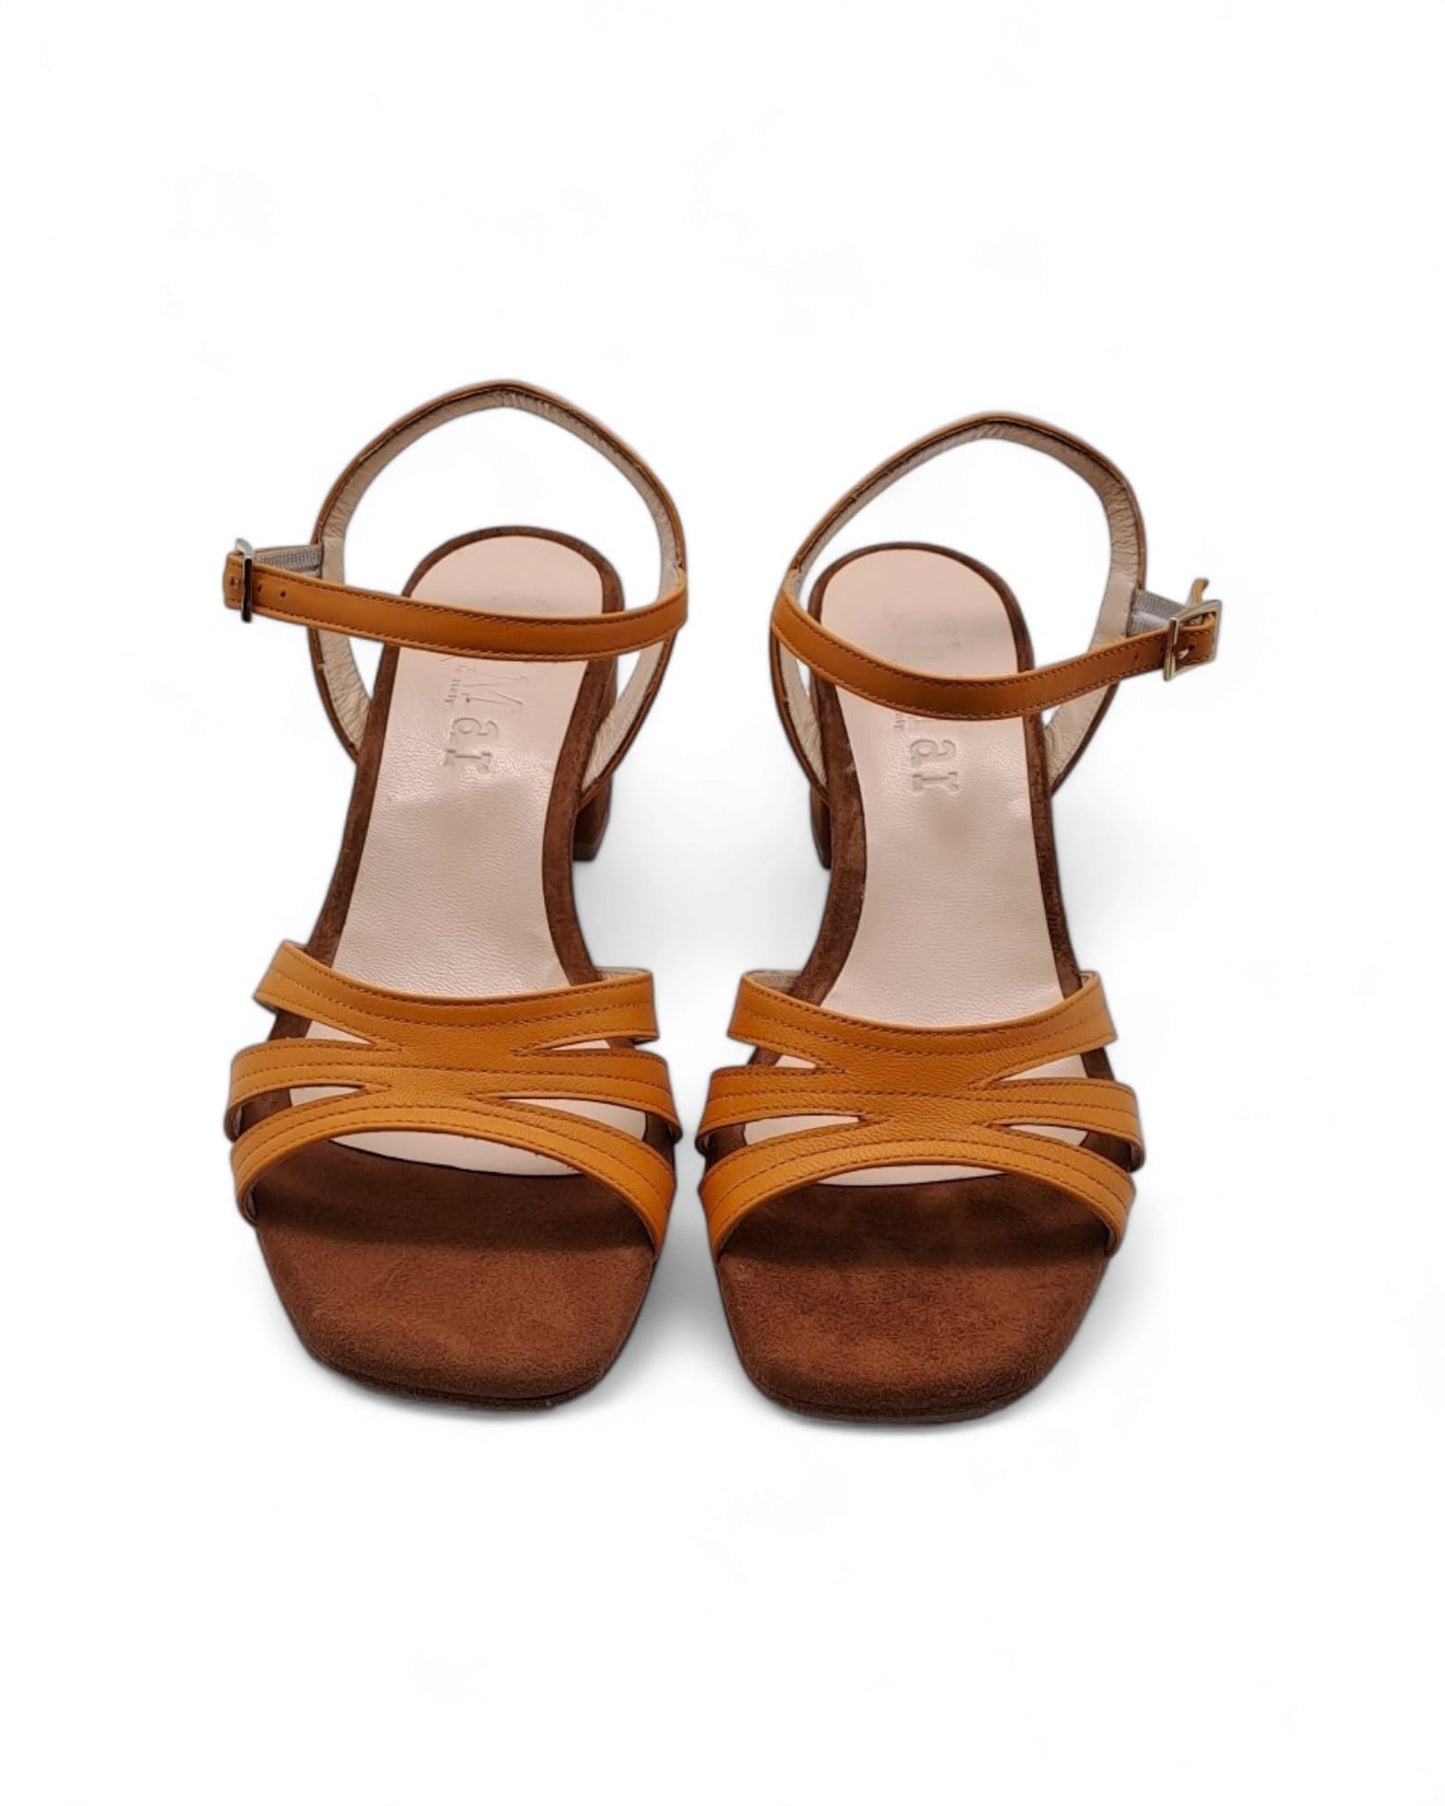 Emma Nappa Pumpkin/turmeric suede sandal